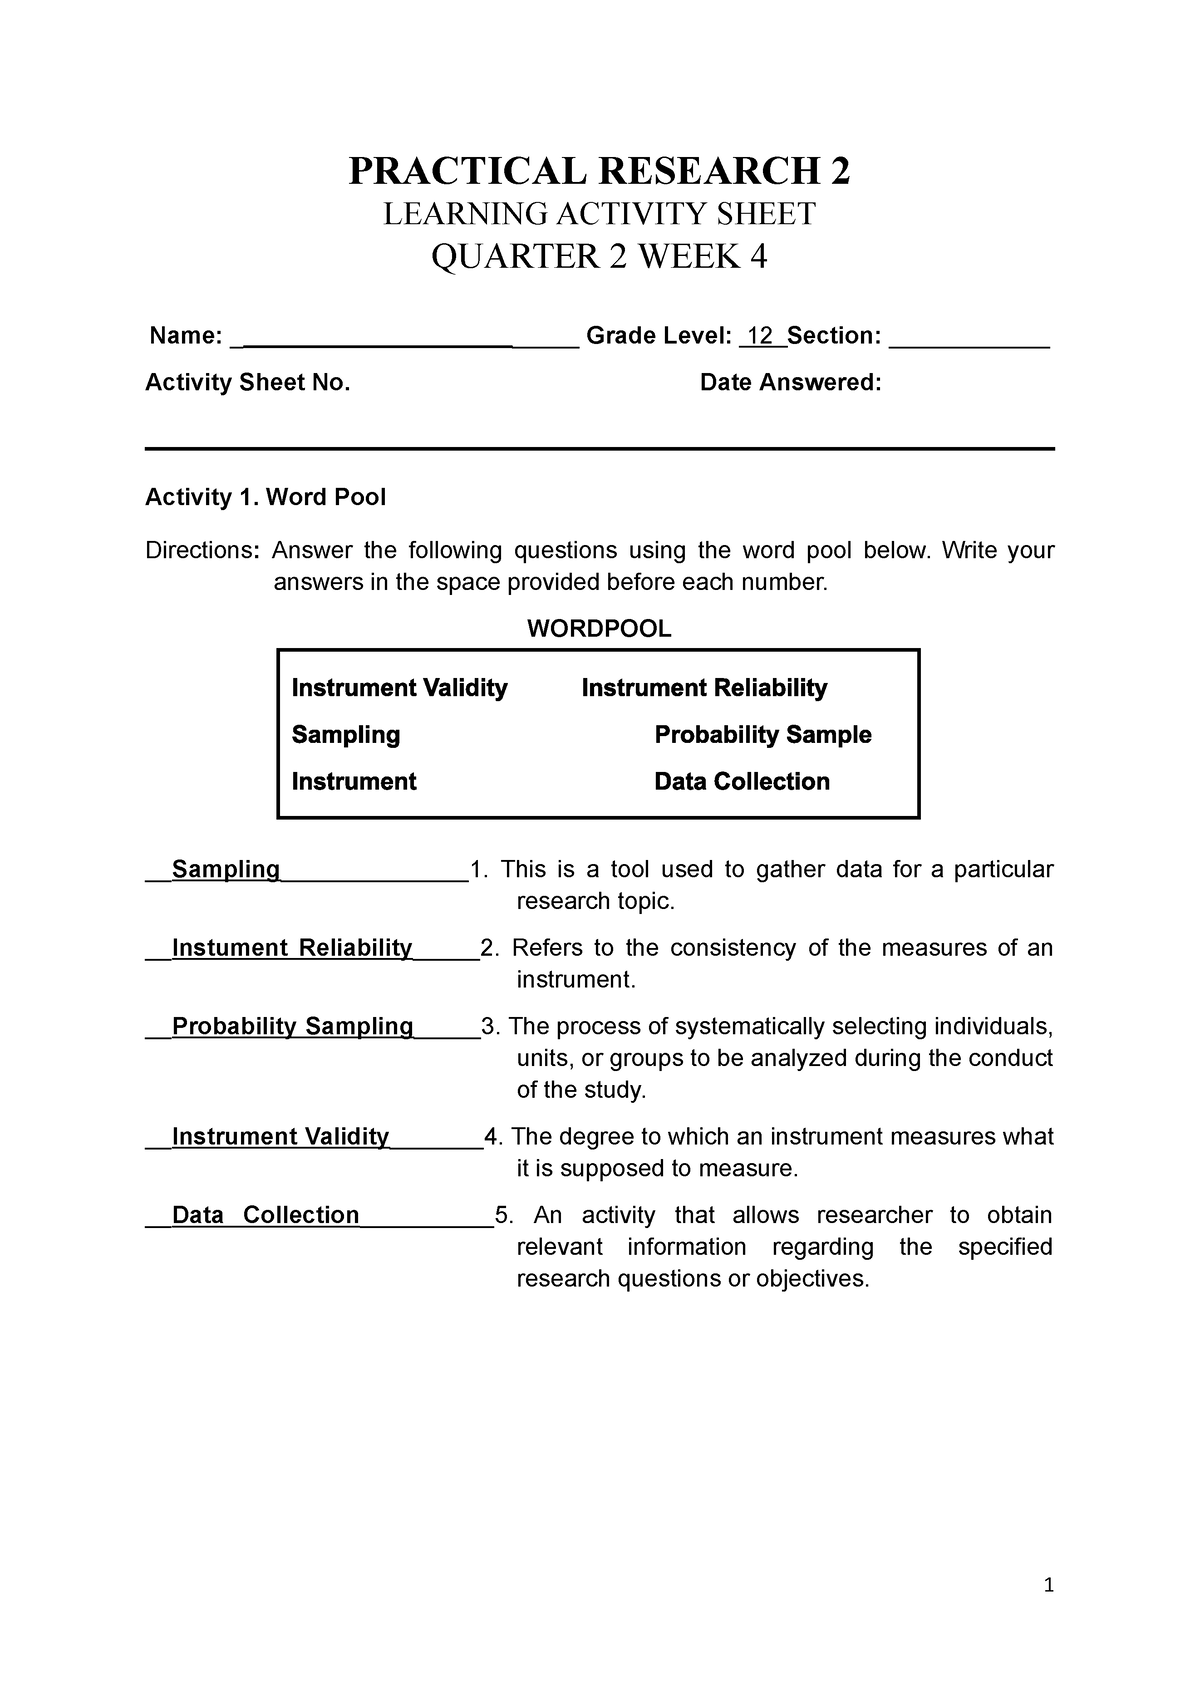 Pr2g12q2w4 Quarter 4 Assignments Practical Research 2 Learning Activity Sheet Quarter 2 6570